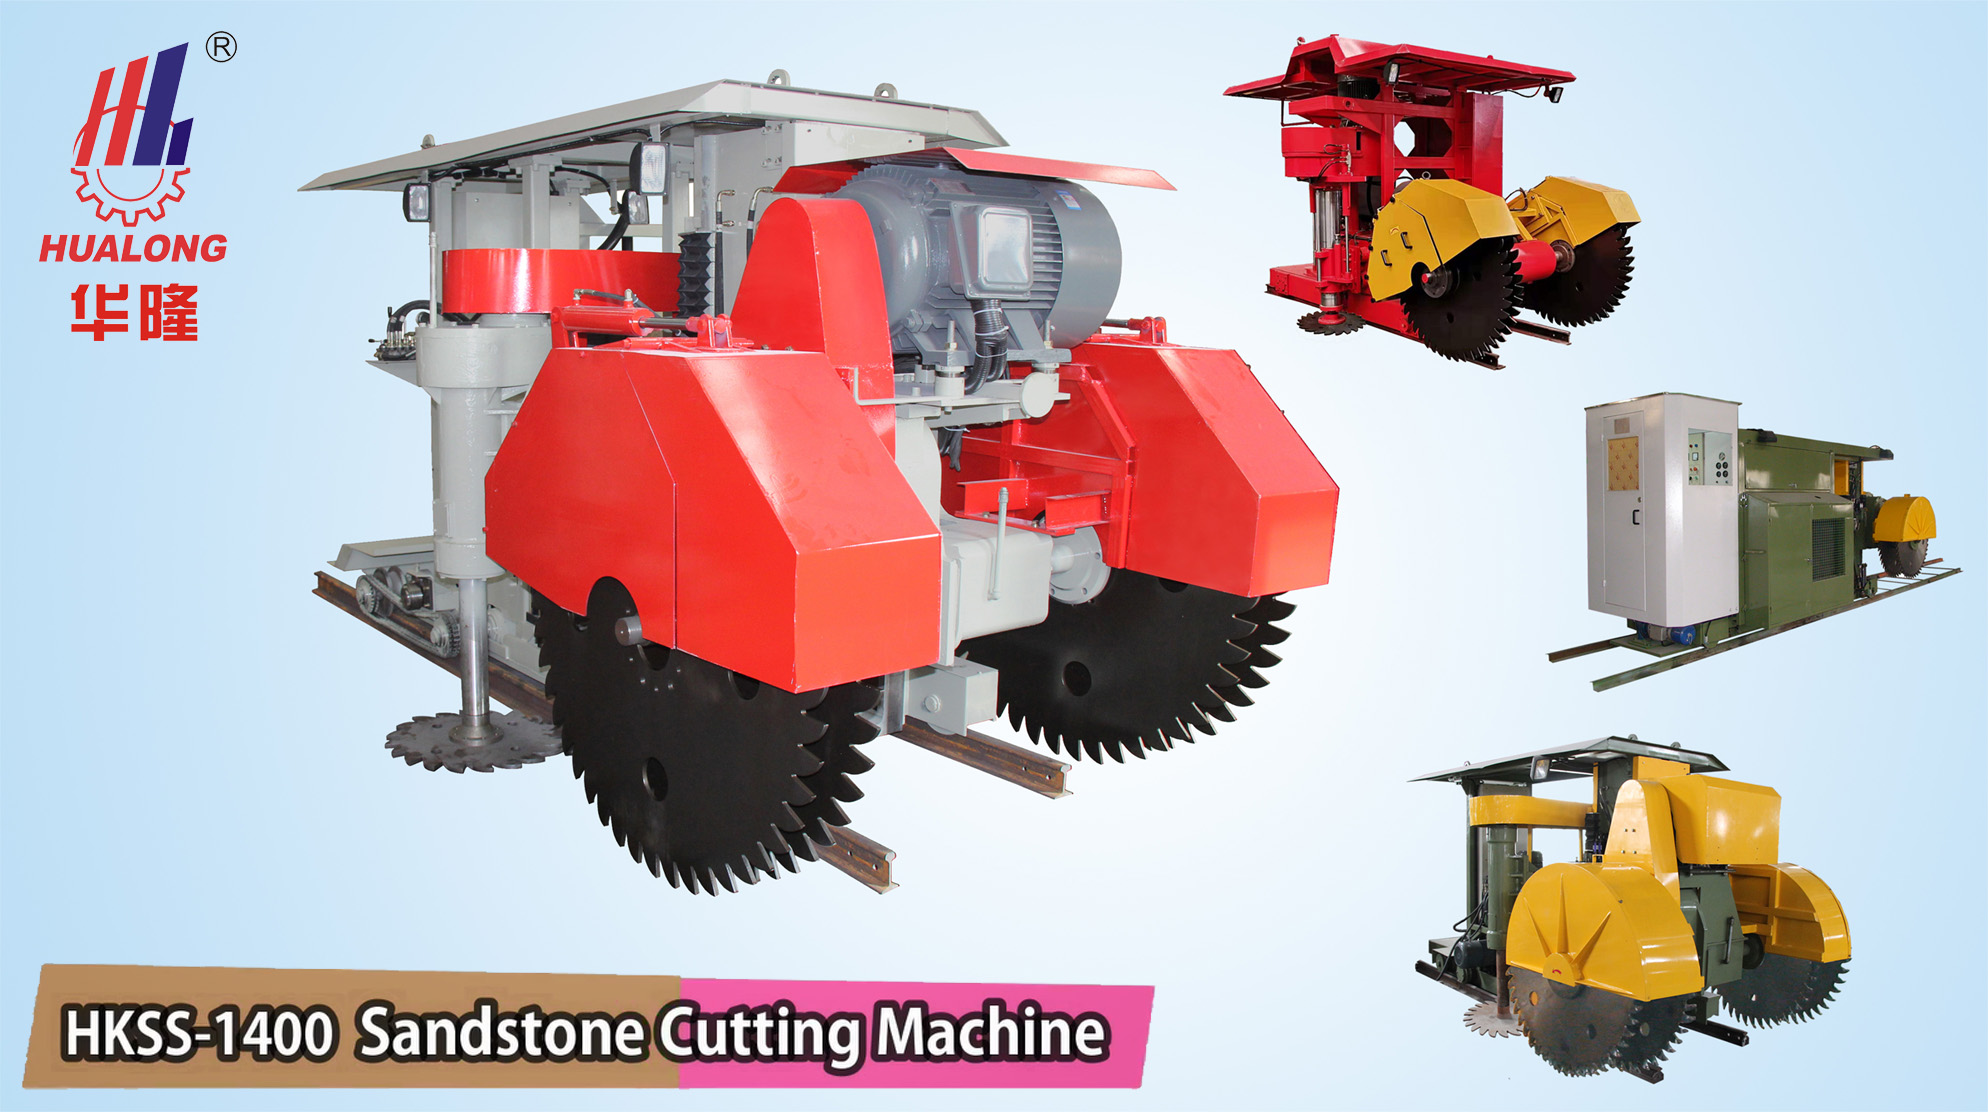 Sandstone Cutting Machine Price